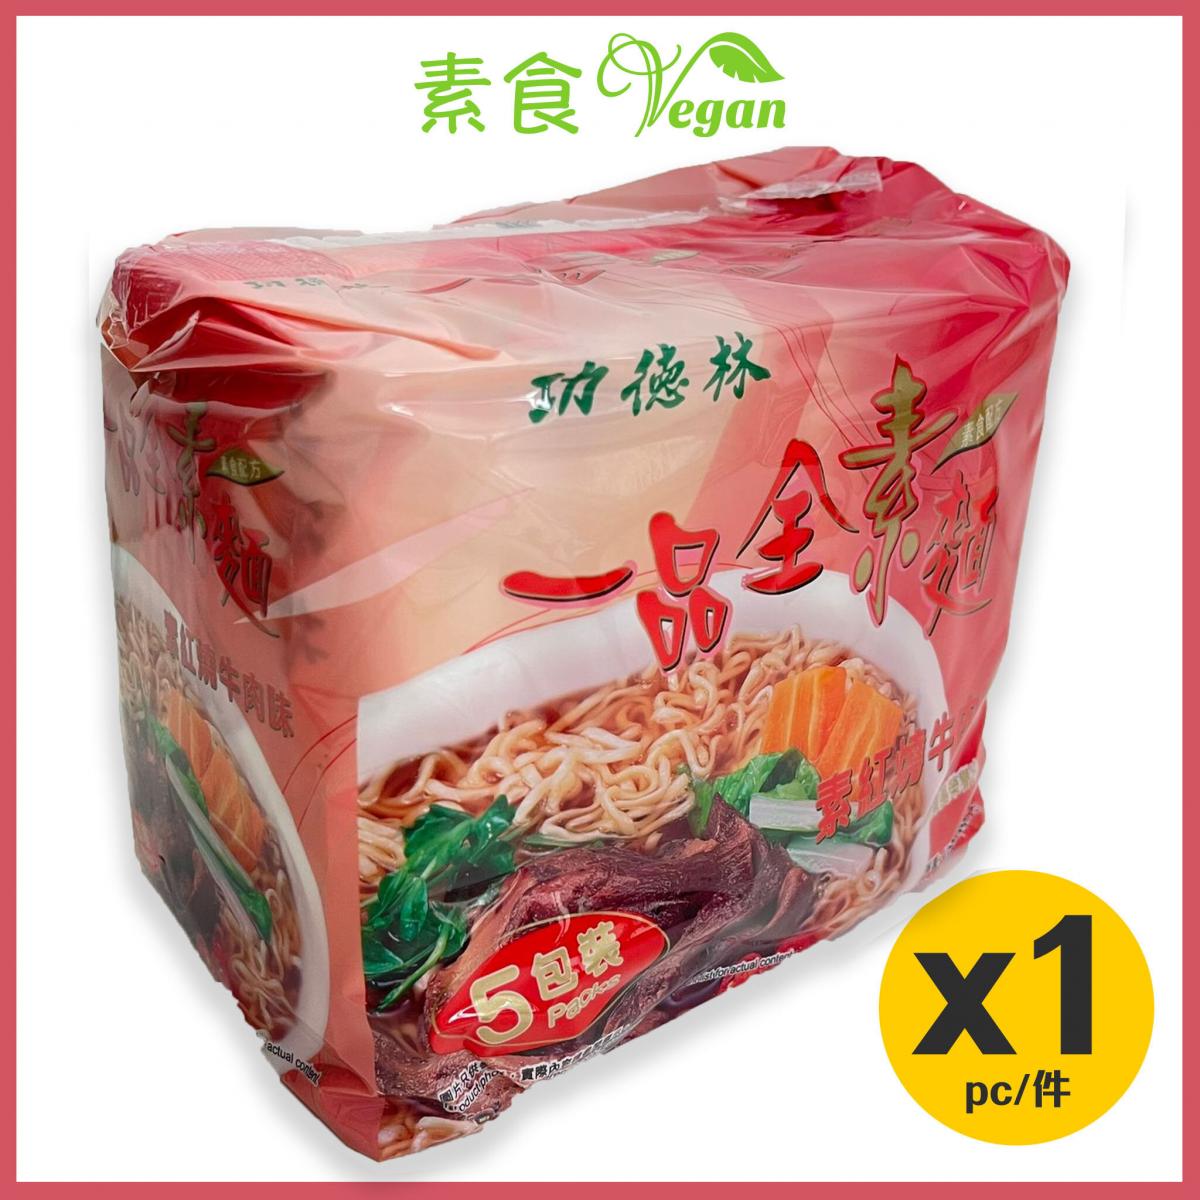 一品素麵 紅燒牛肉425g x 5包裝 (1件) / Yipin Plain Noodles Braised Beef 425g x 5 packs (1pc)[Vegetarian Noodles]